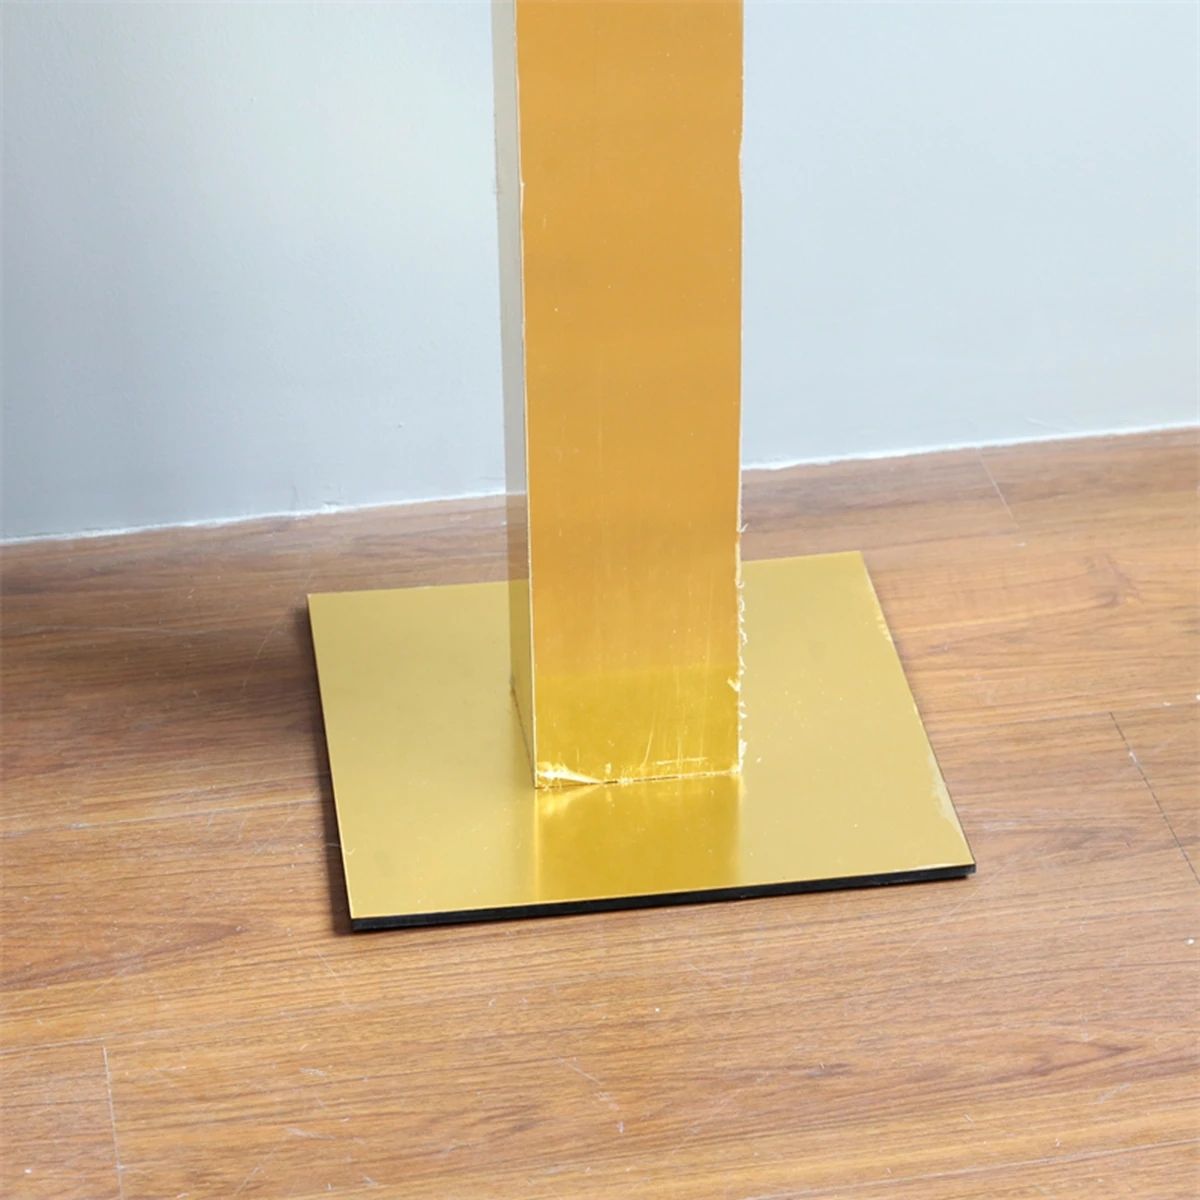 60cm tall gold